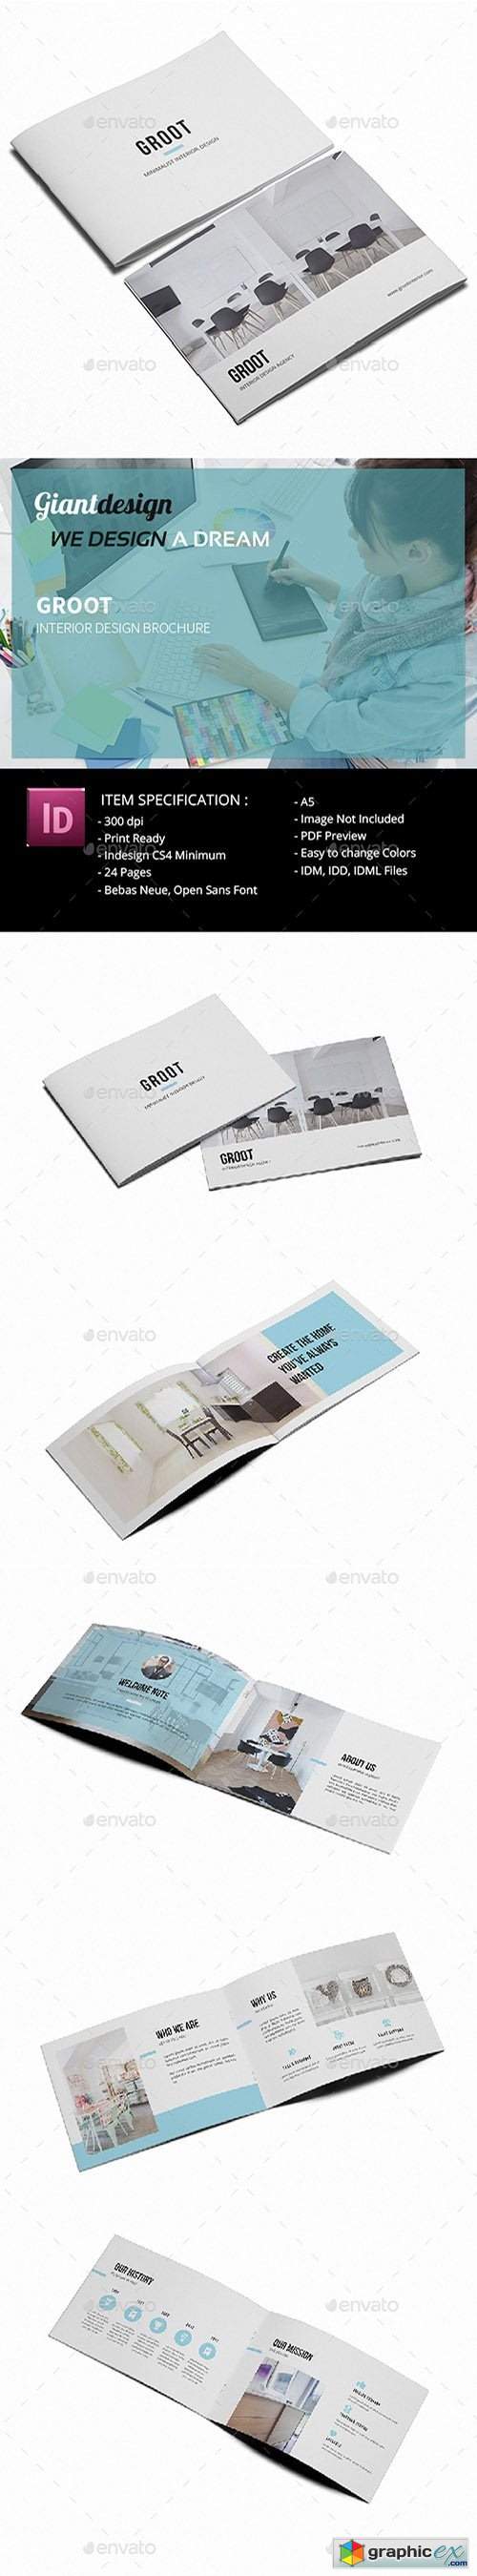 Groot Interior Design A5 Brochure